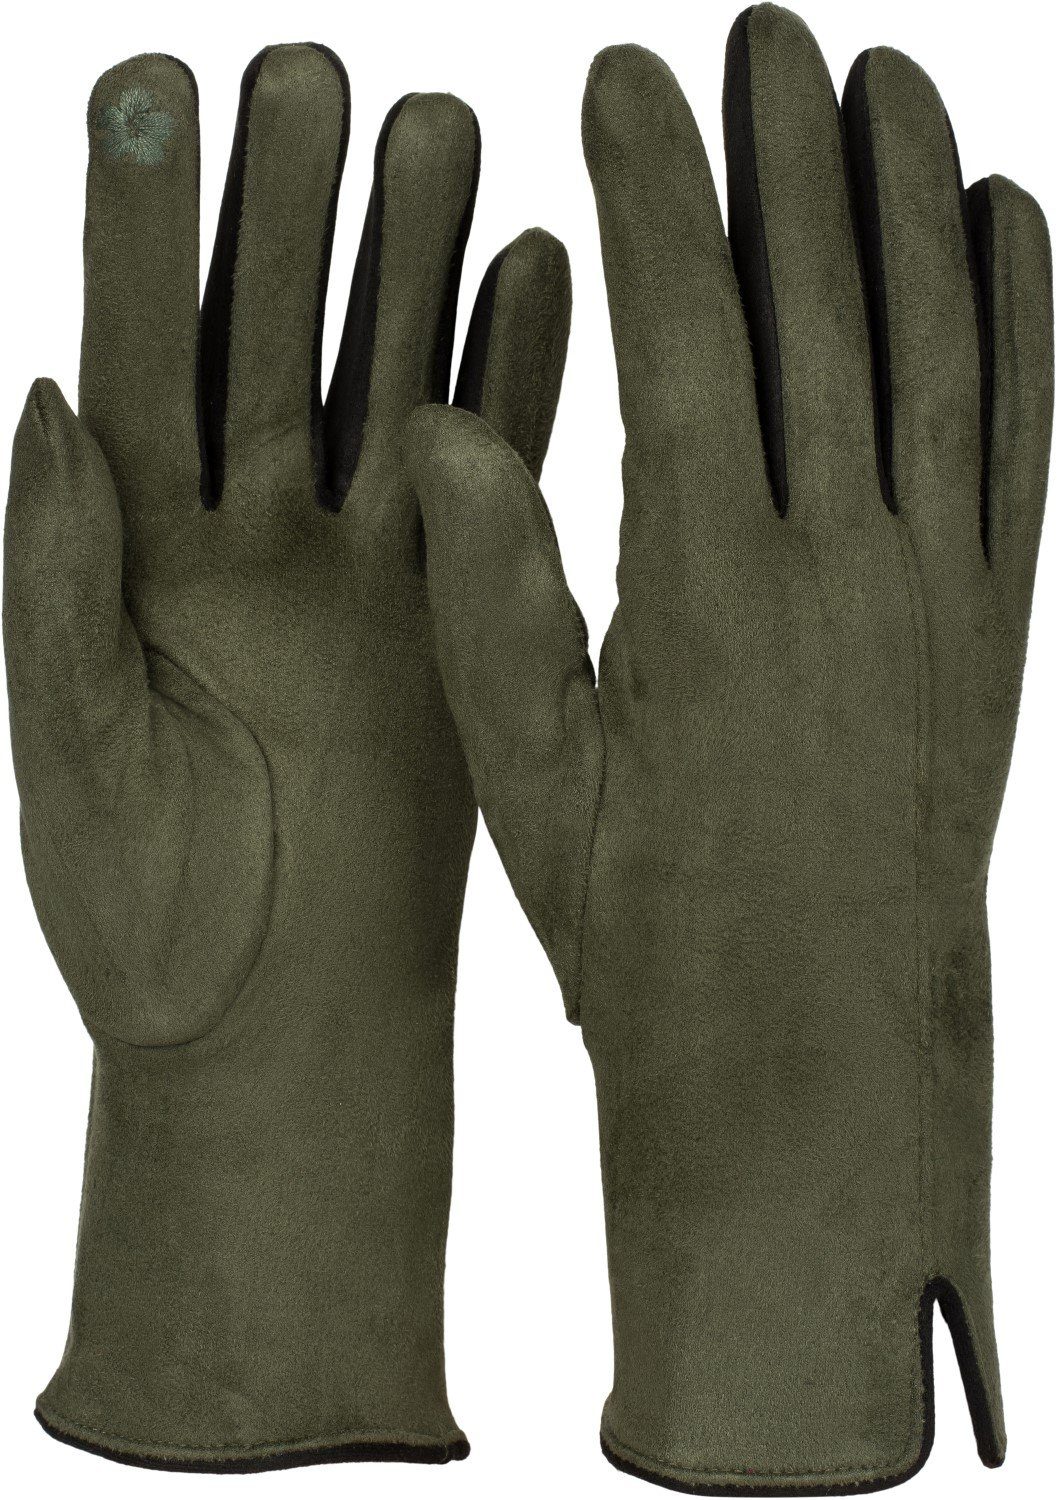 styleBREAKER Fleecehandschuhe Touchscreen Handschuhe Kontrast Oliv